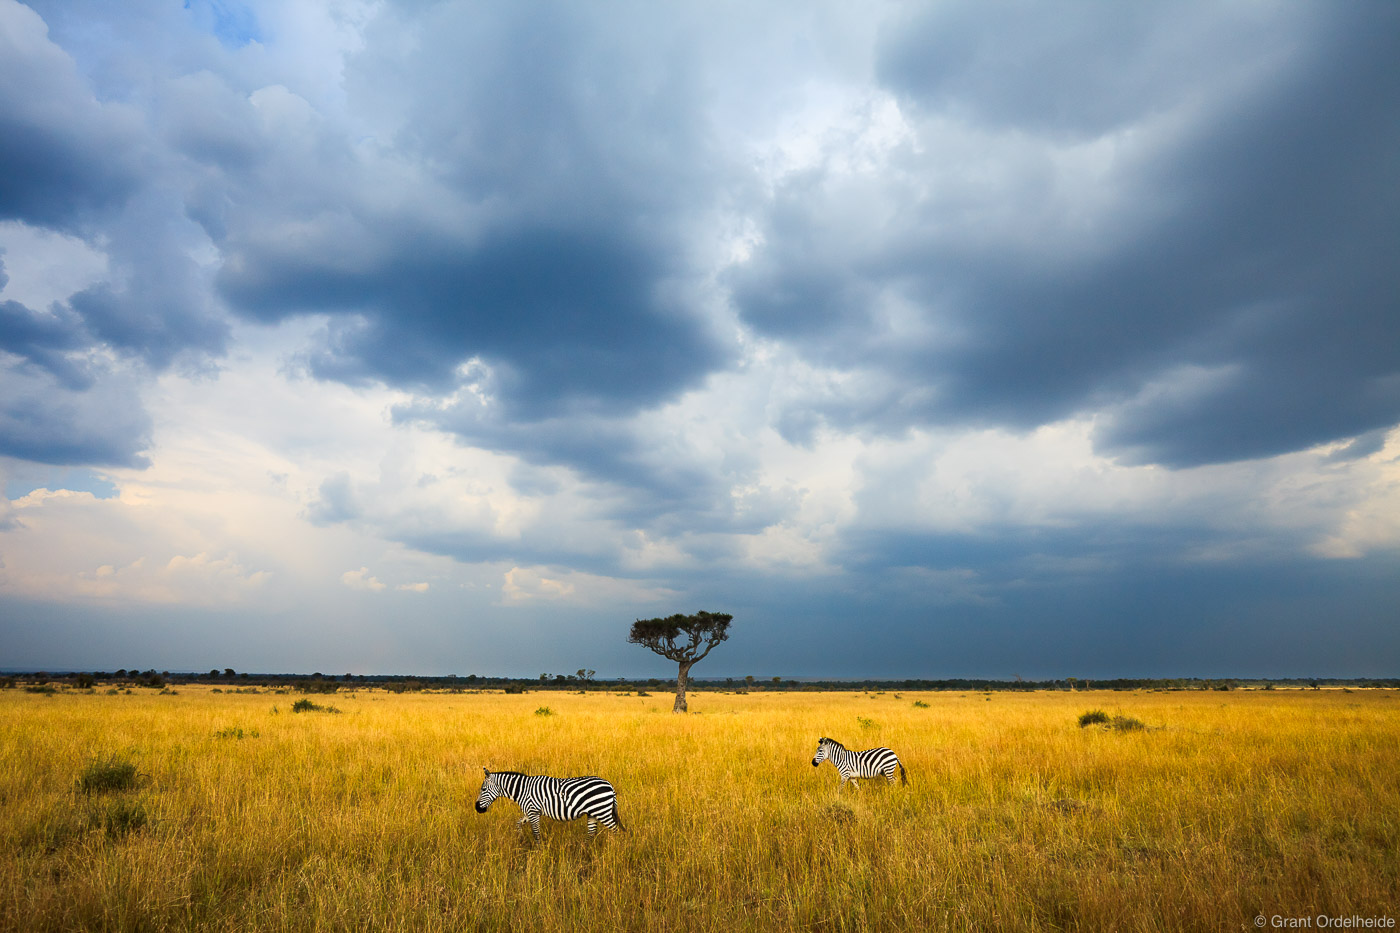 Two Zebras walk through the Mara under stormy skies.